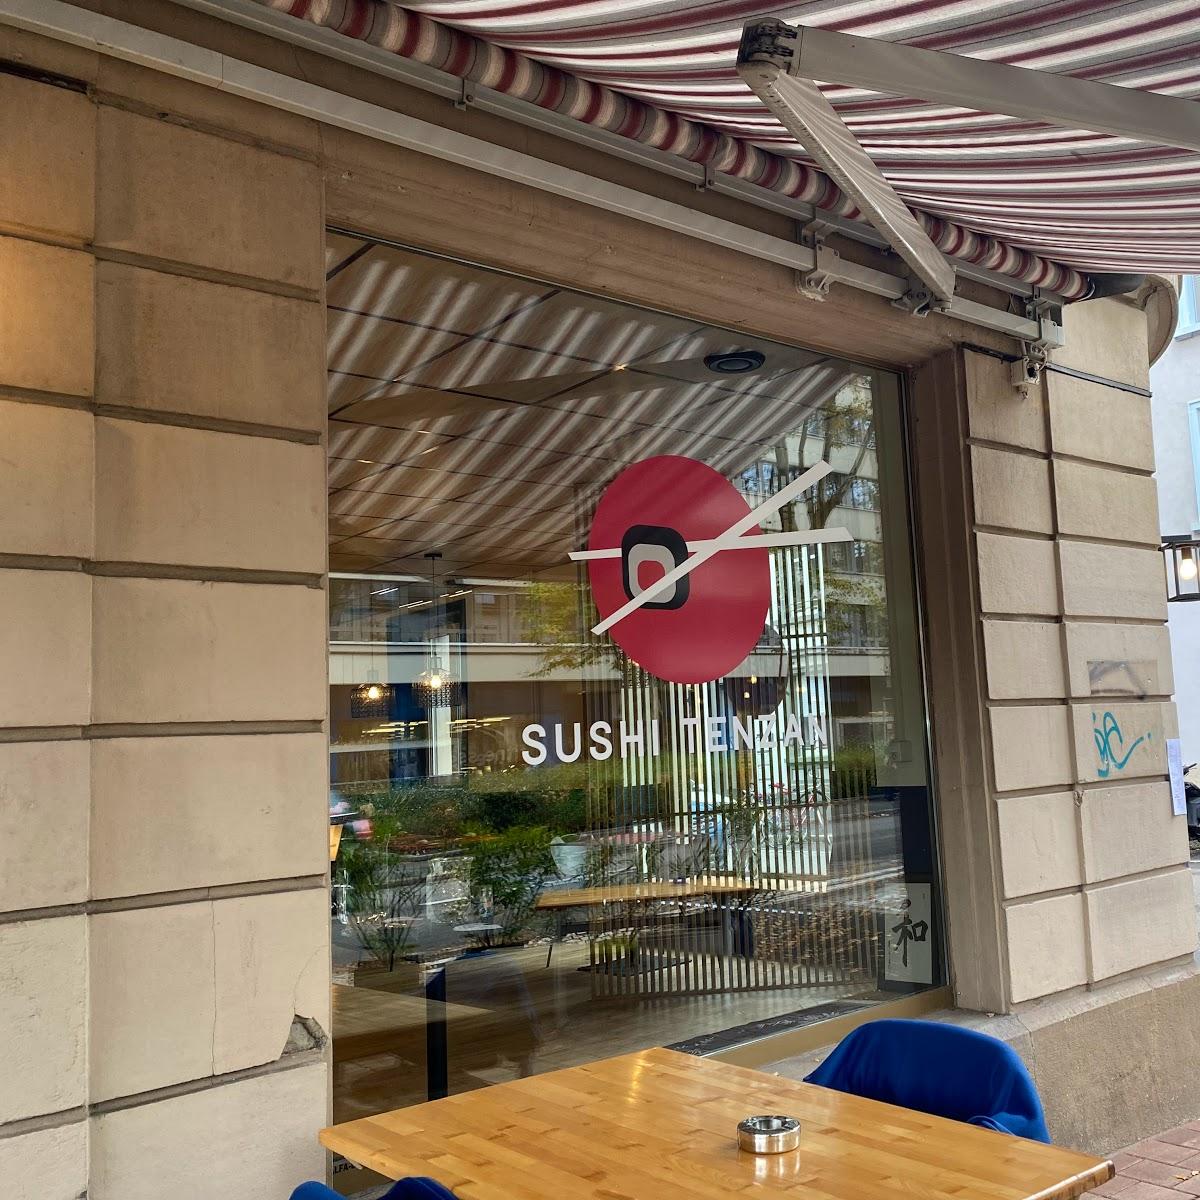 Restaurant "SUSHI TENZAN RESTAURANT" in Basel